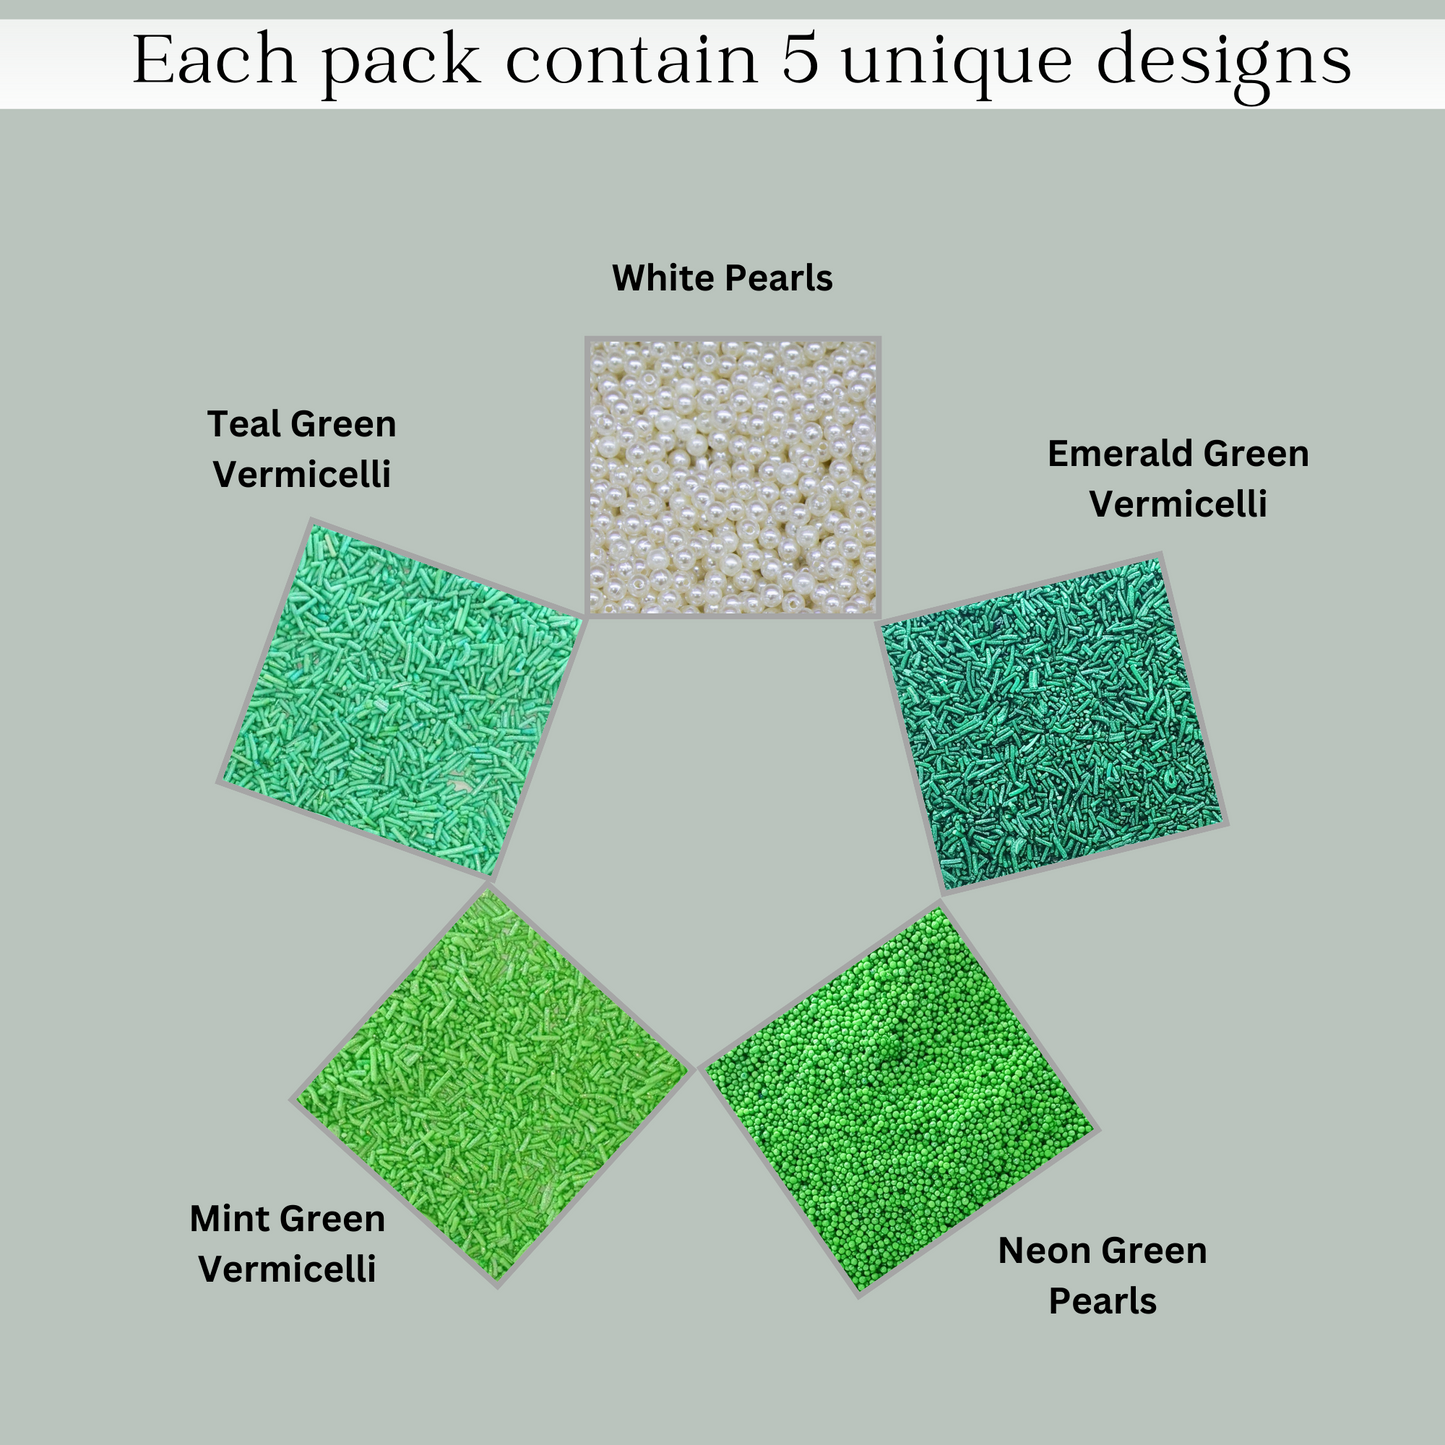 St. Patrick's Sprinkles PS Multipack 2 - 100 gms